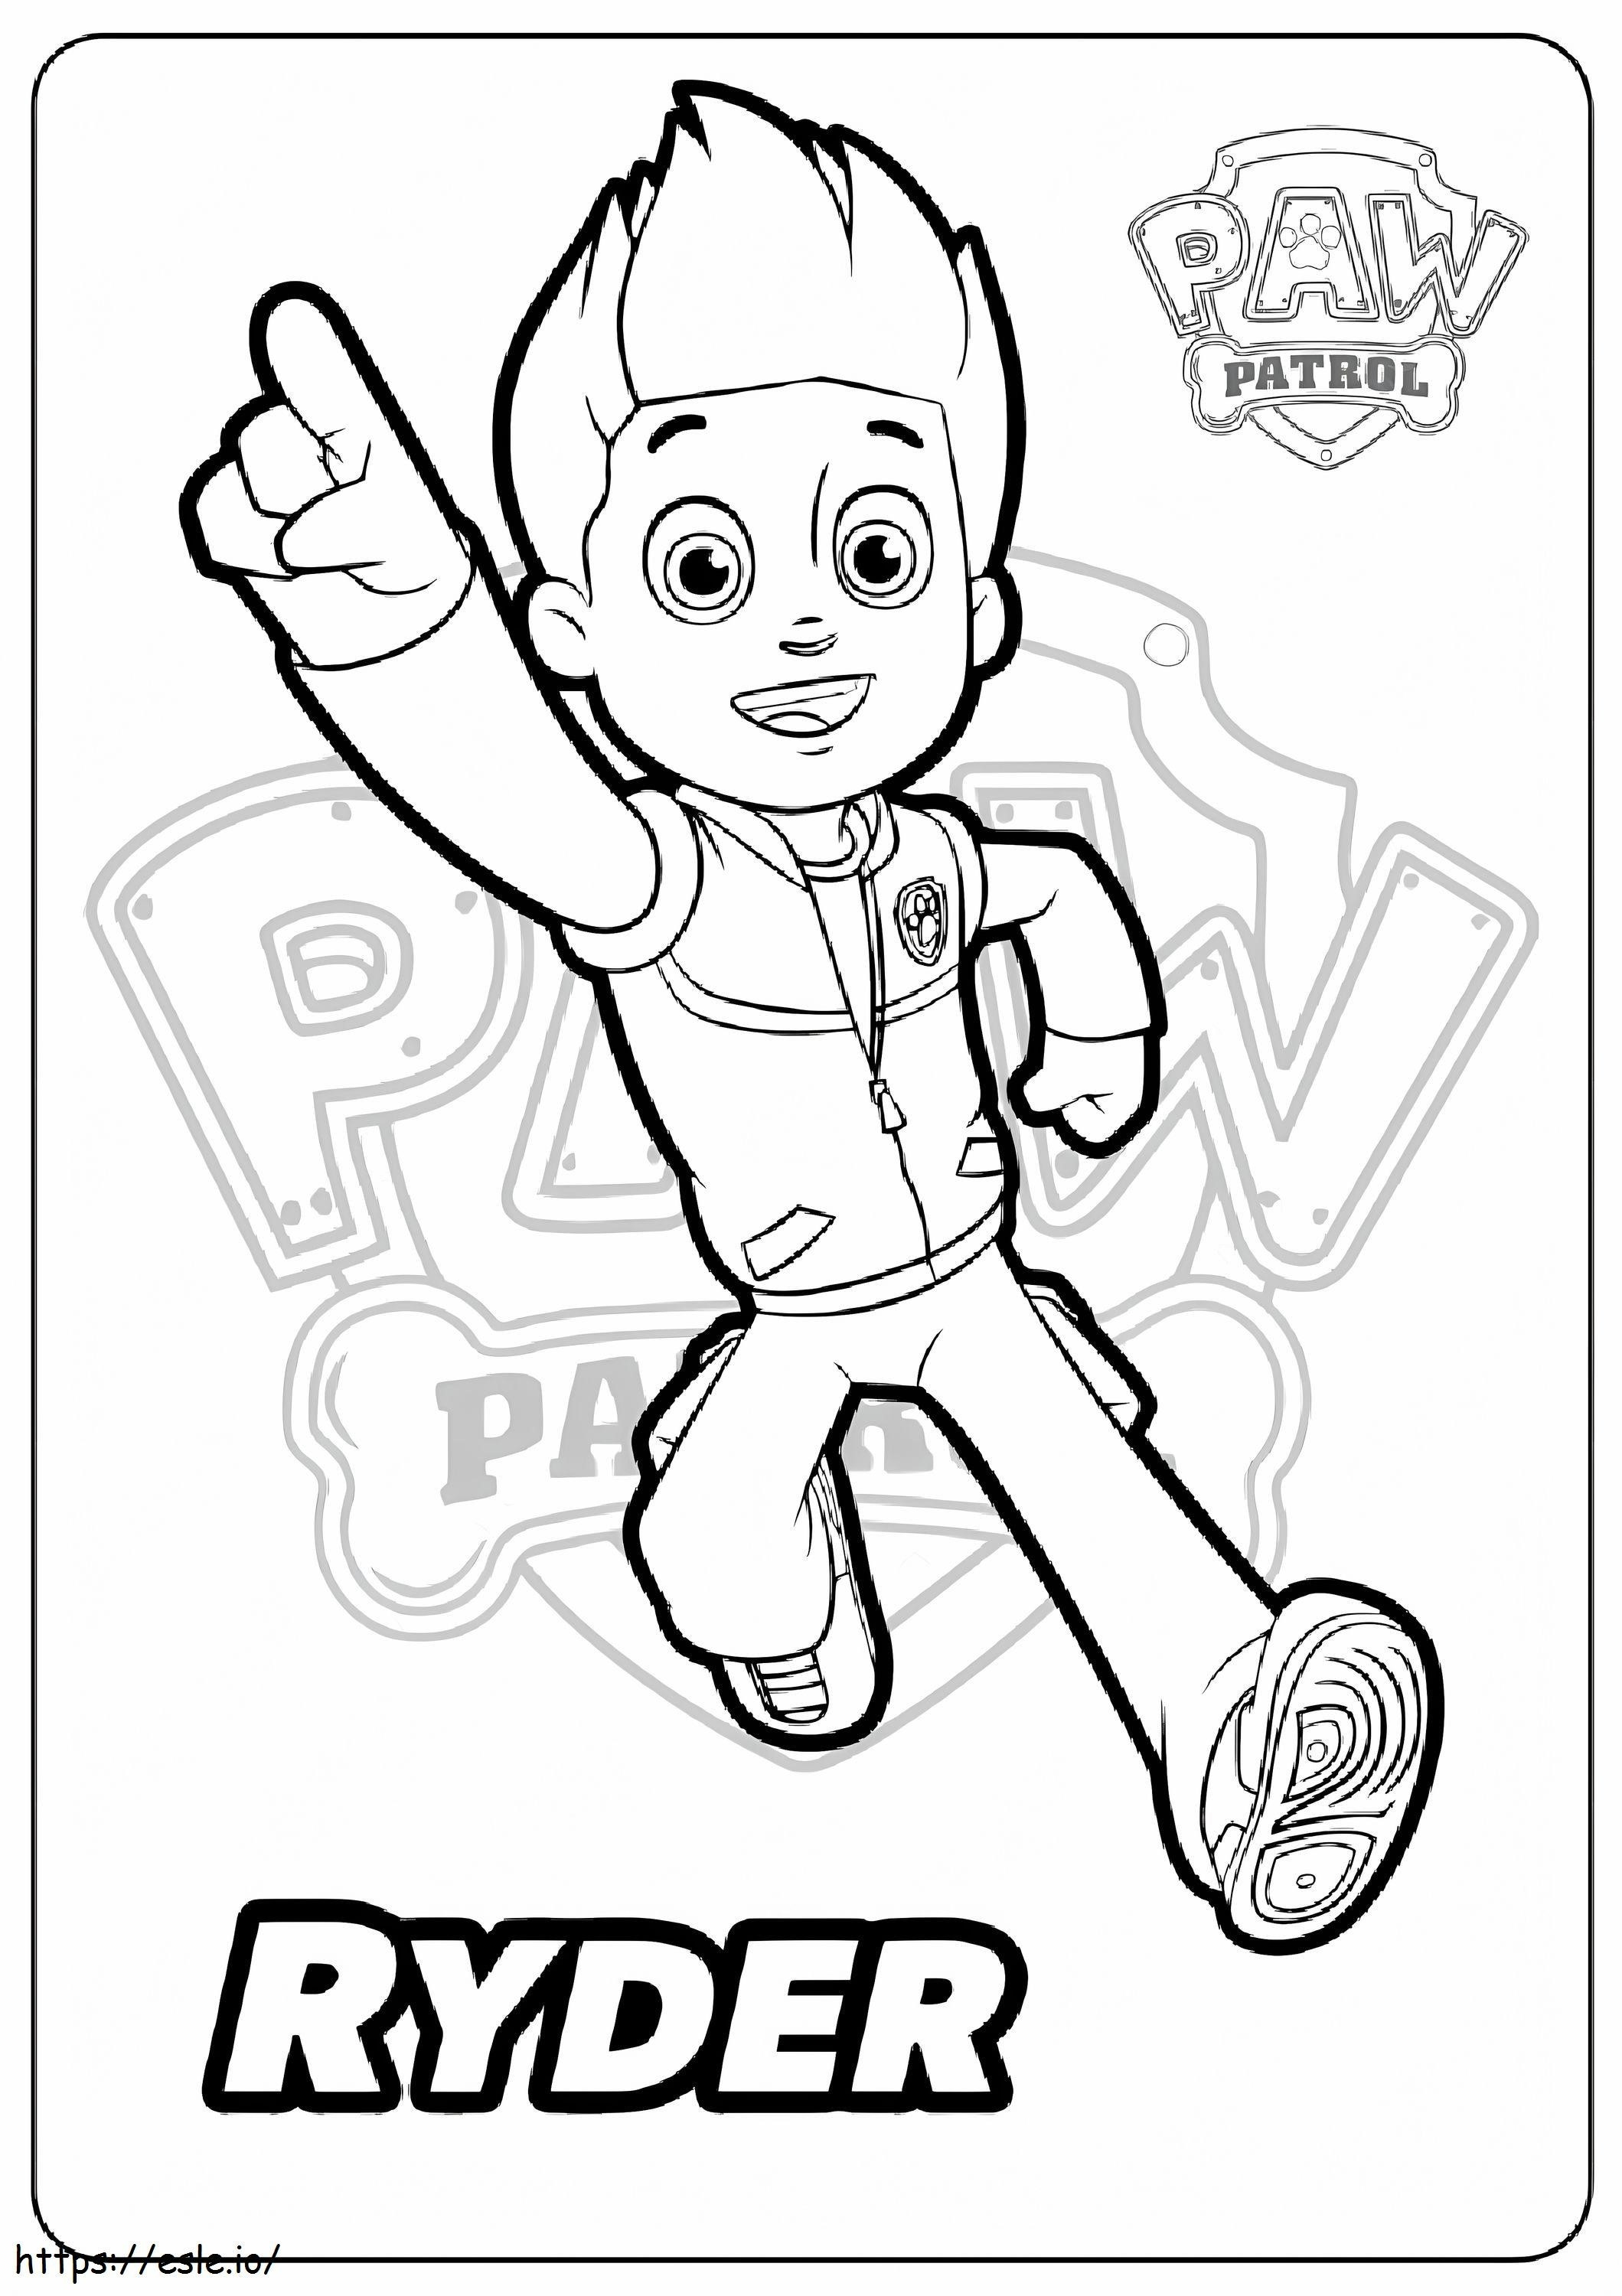 Coloriage Paw Patrol Ryder 2 à imprimer dessin